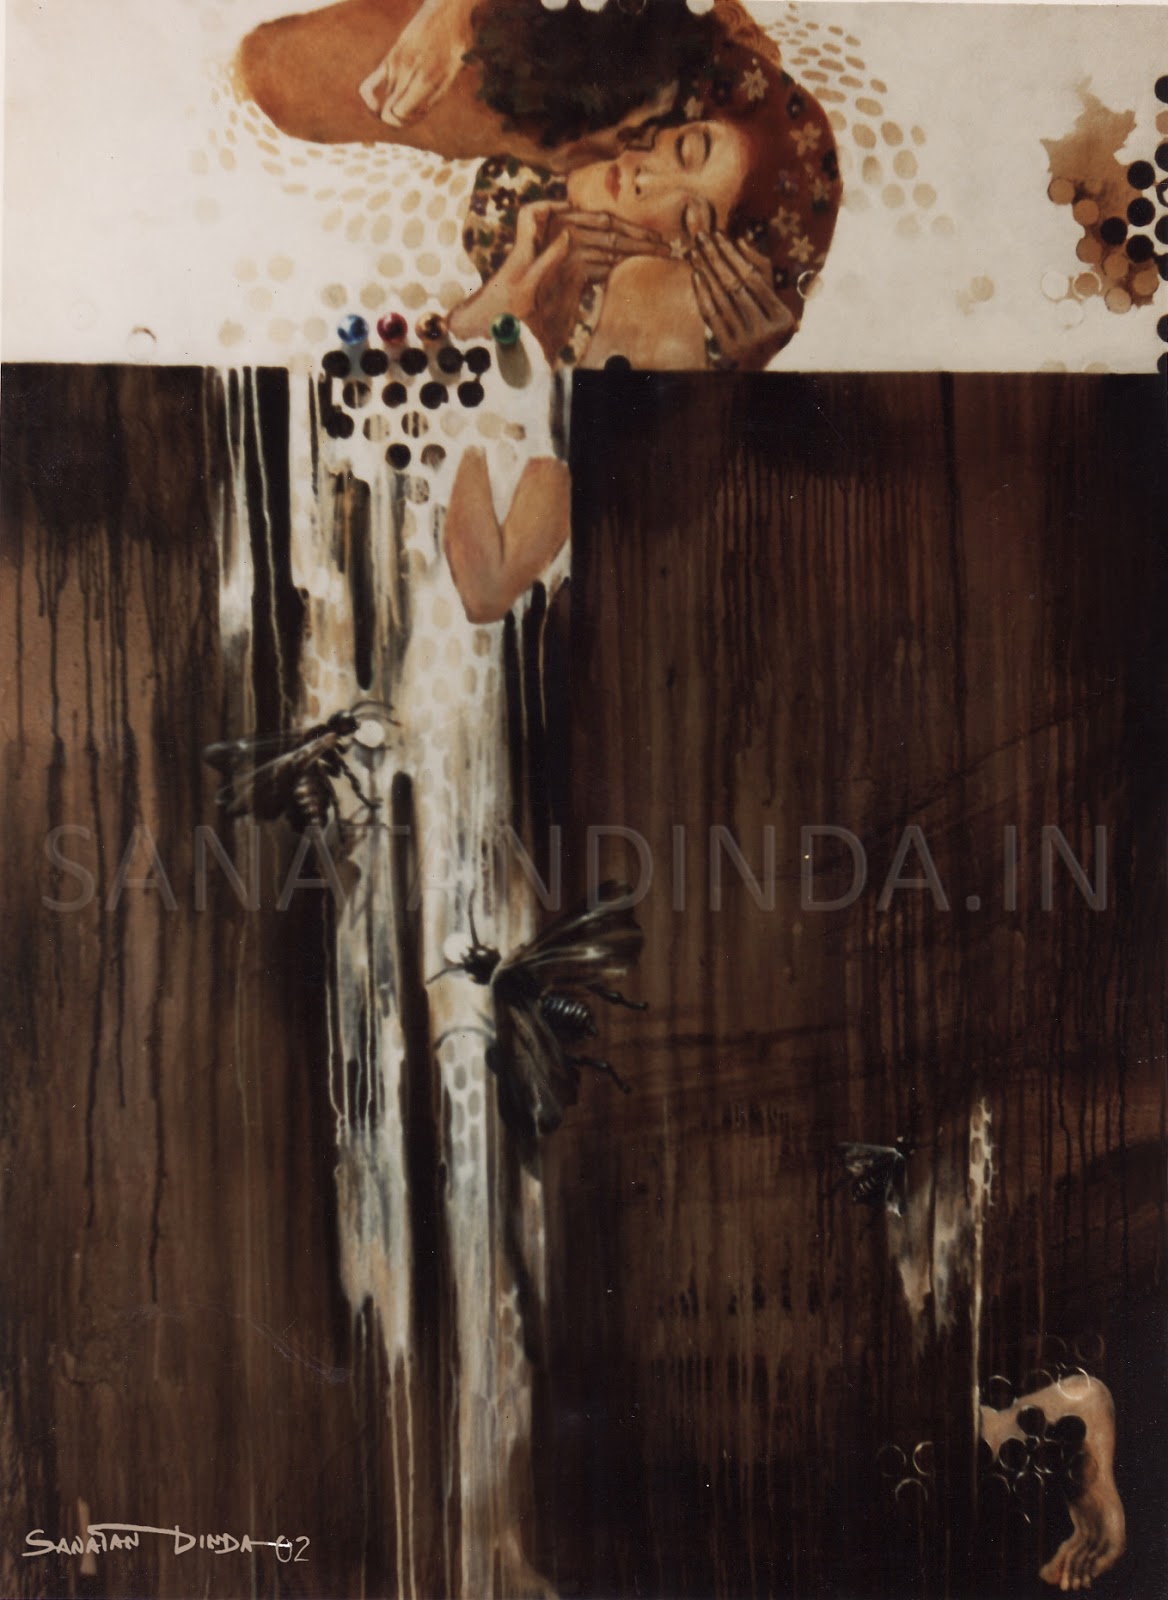 Paintings by Sanathan Dinda 1971